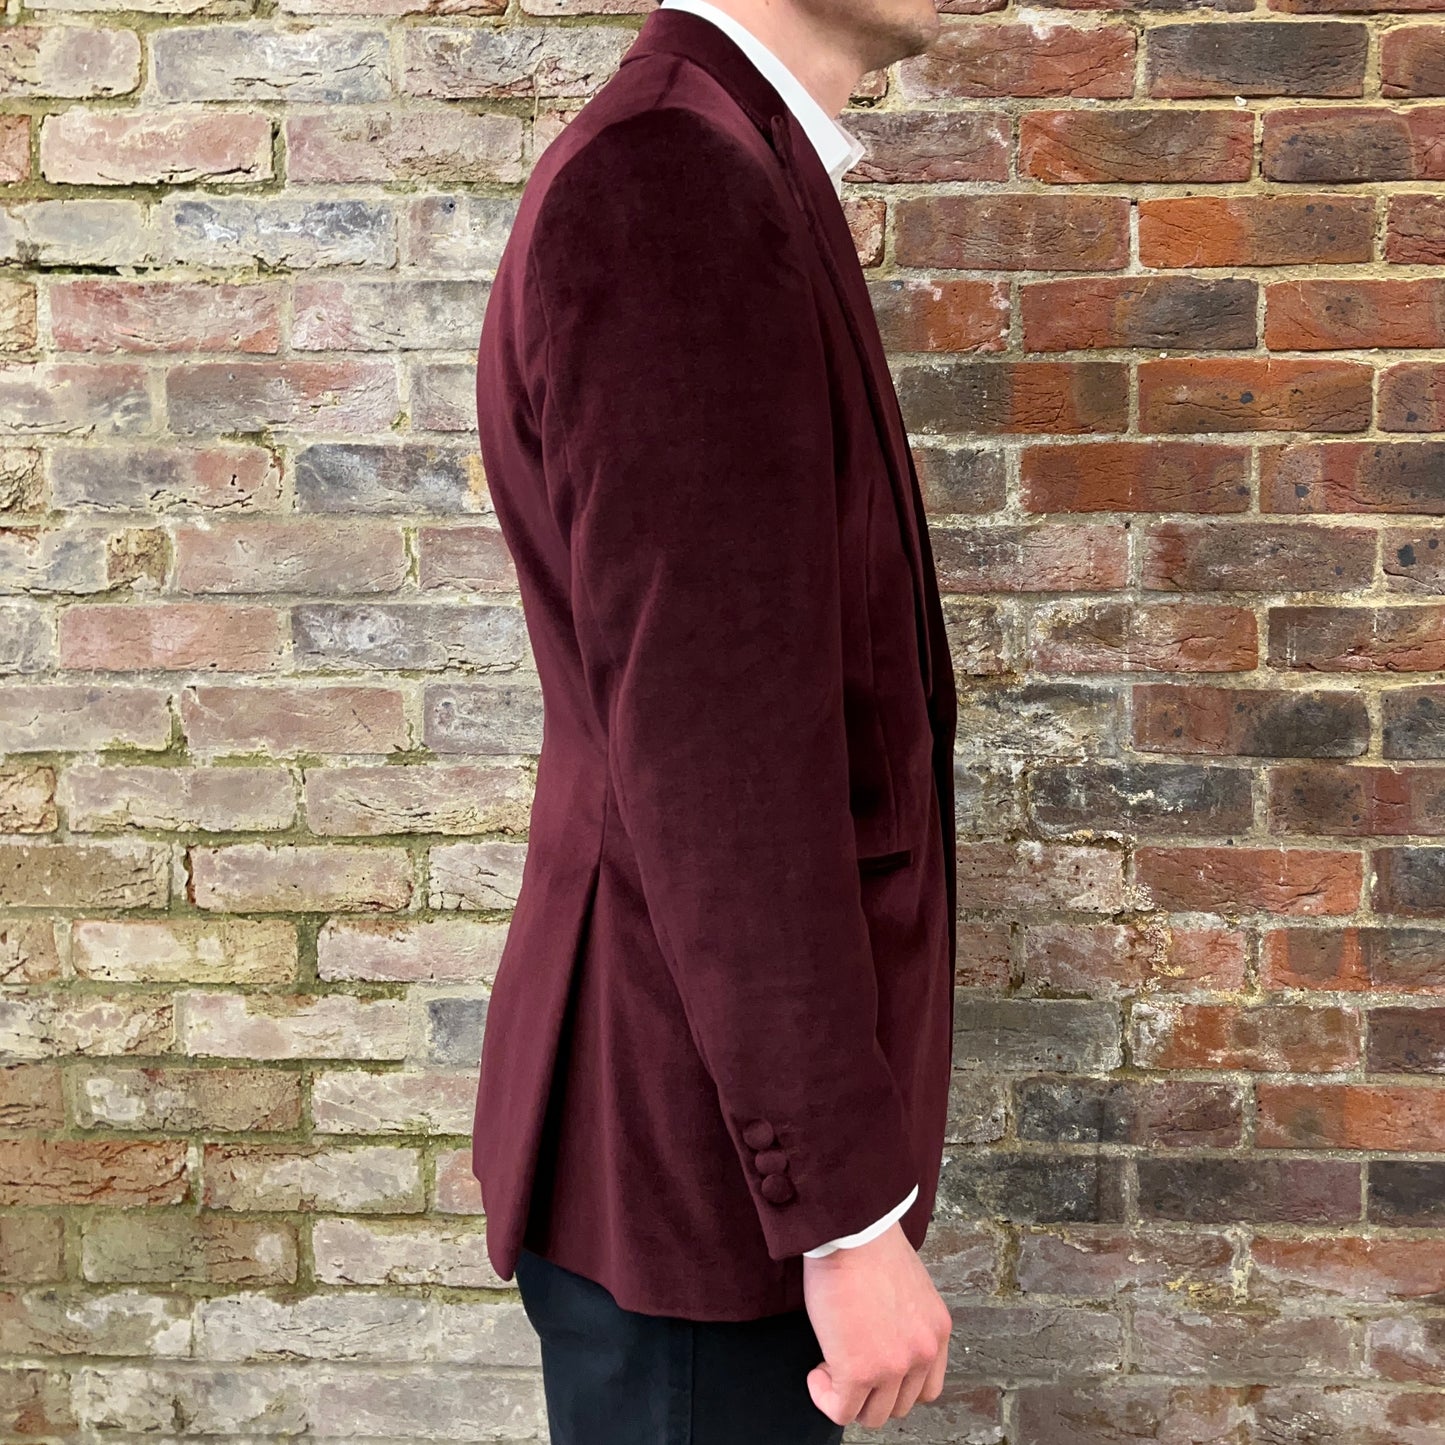 Regent burgundy velvet smoking jacket - side